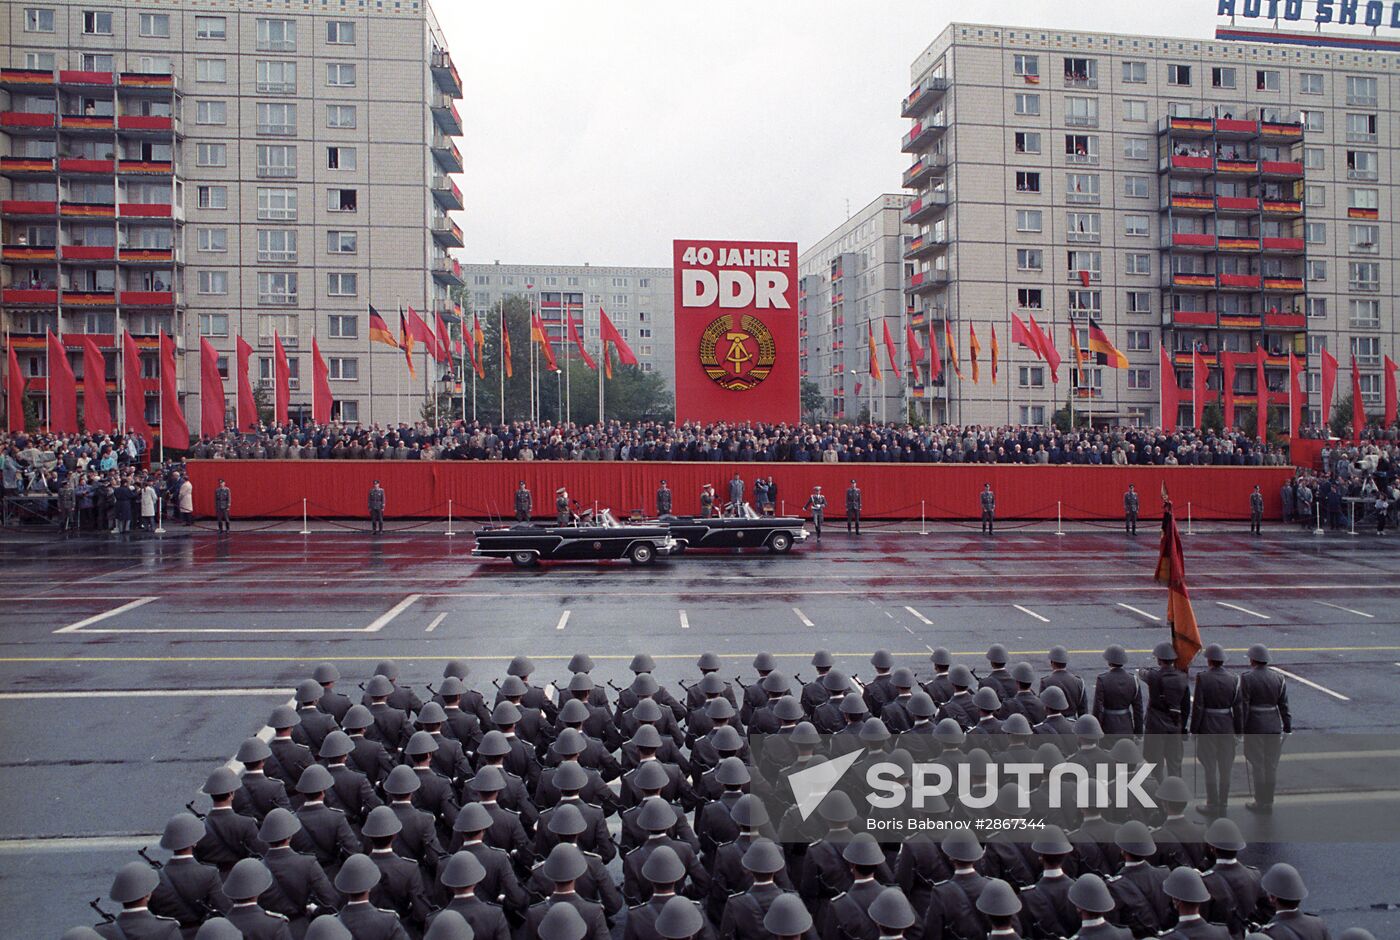 Celebrating GDR's 40th anniversary